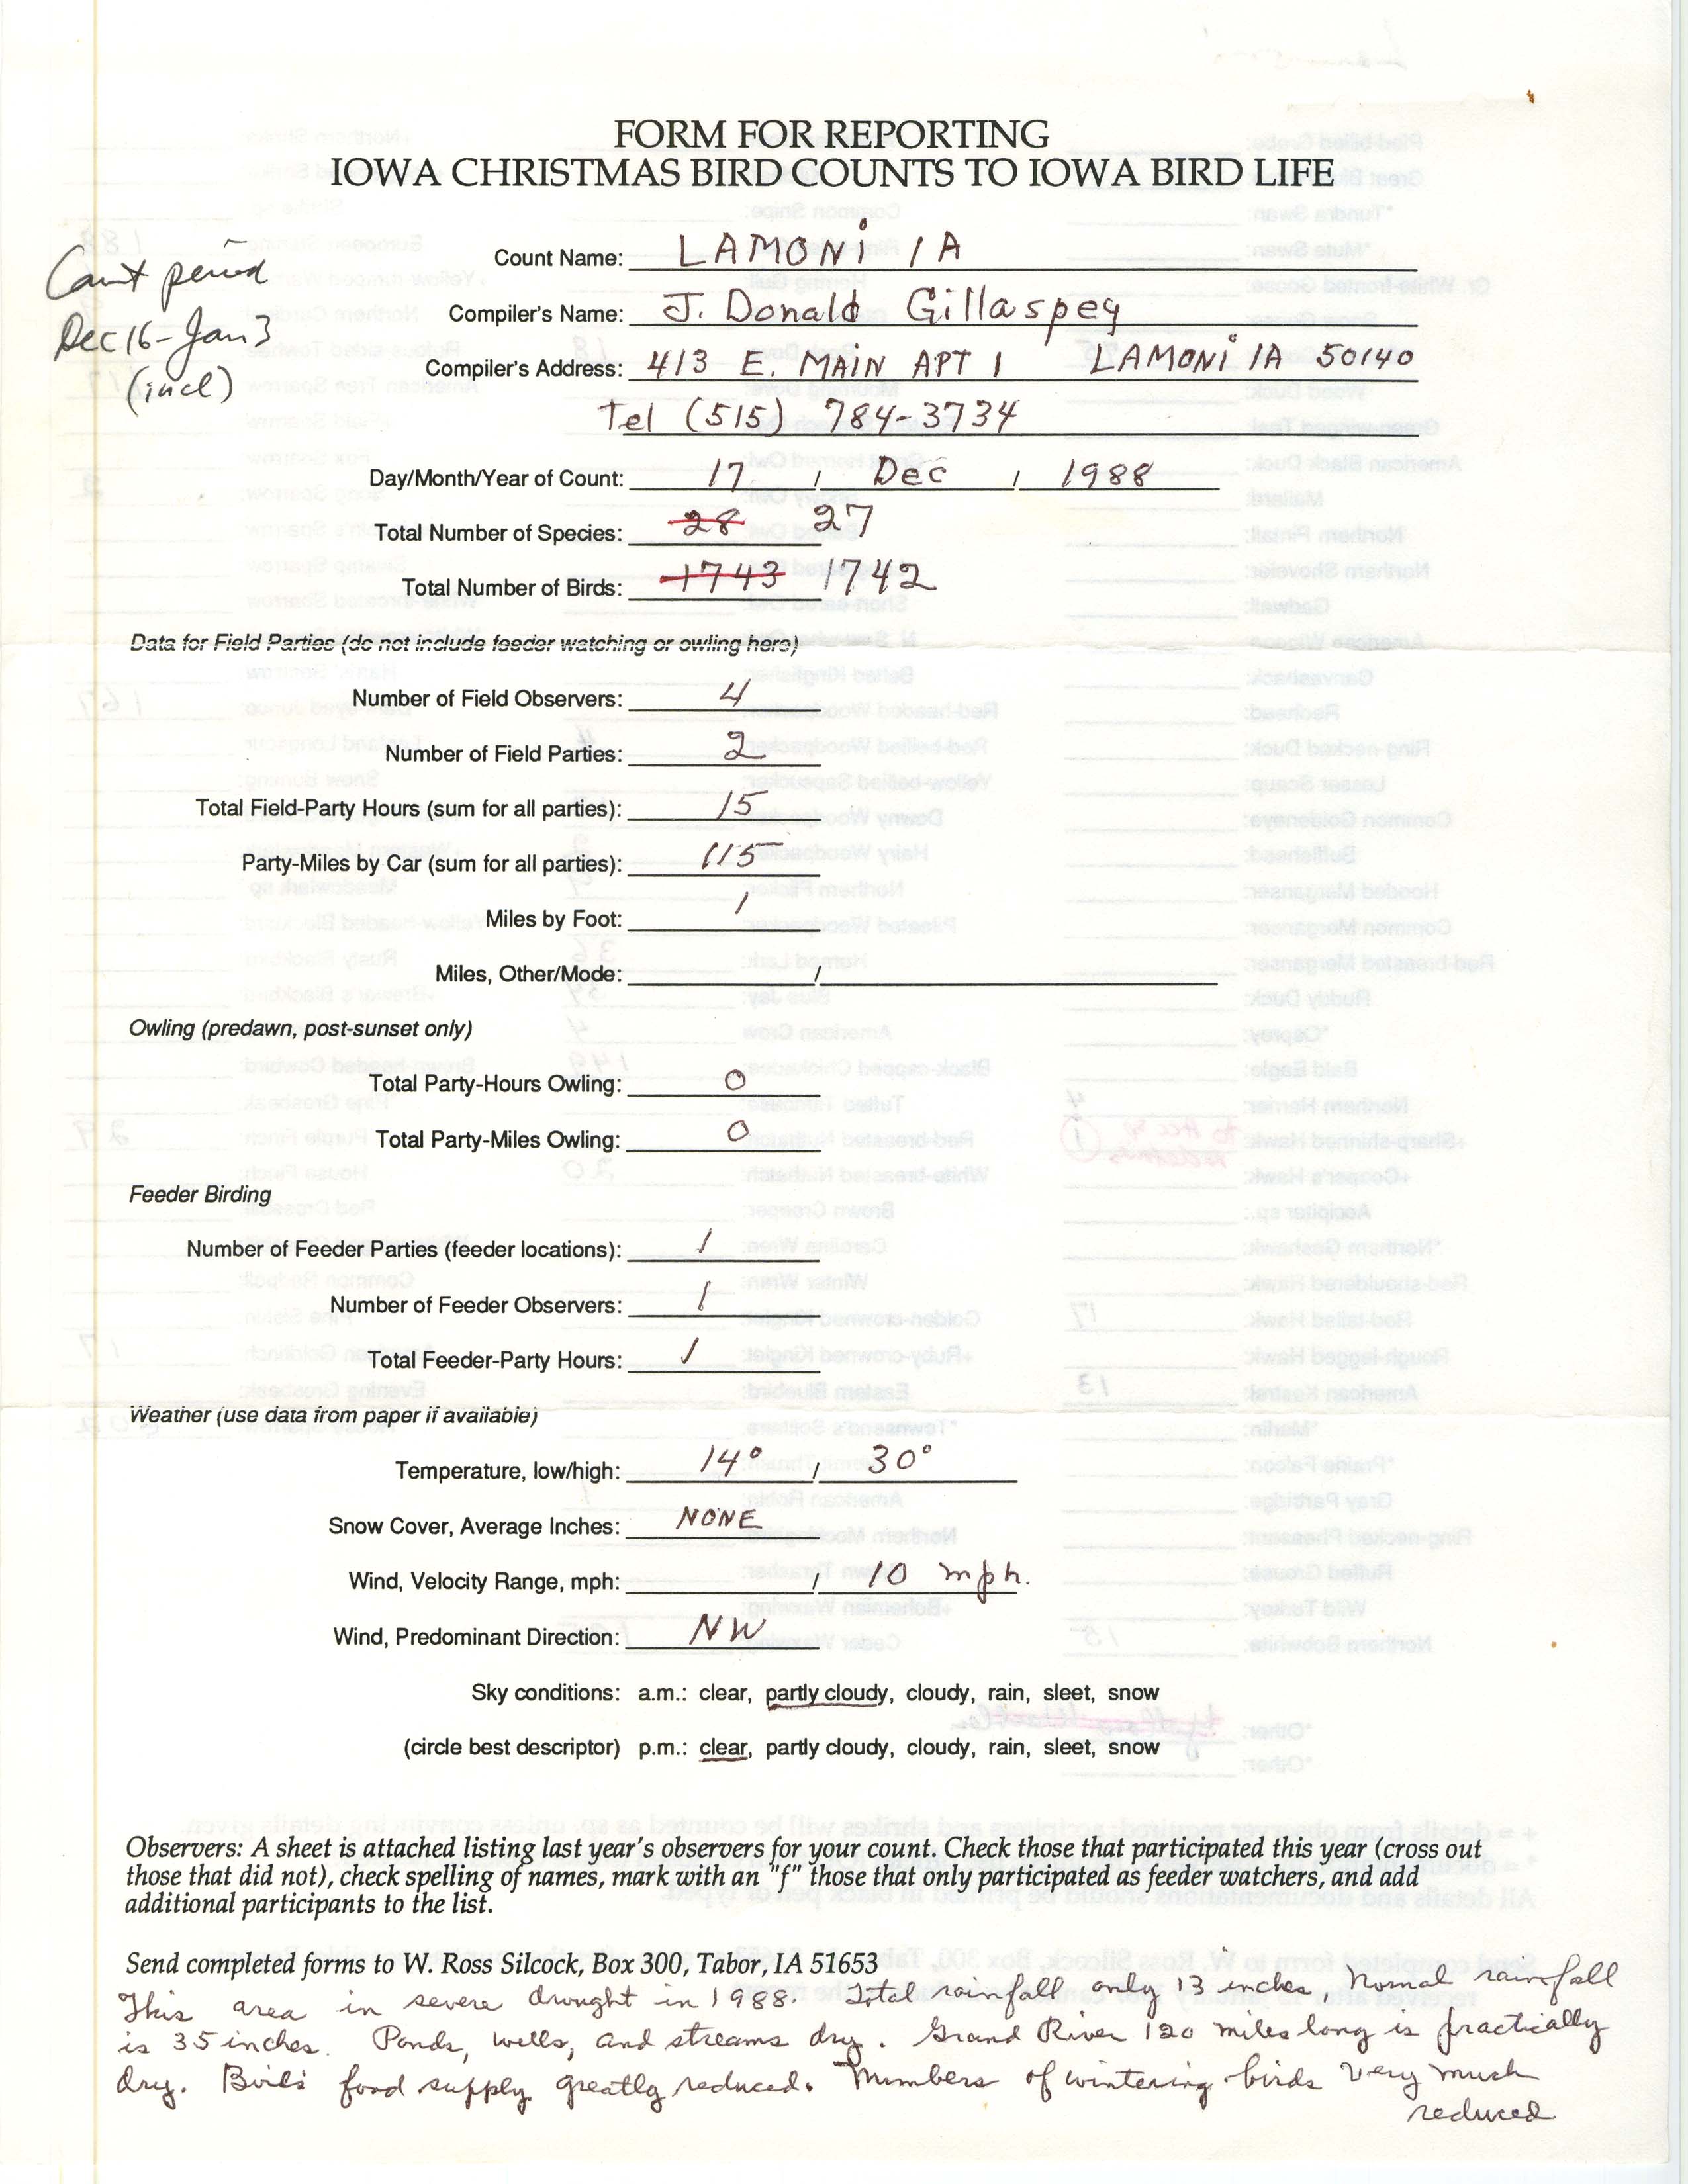 Form for reporting Iowa Christmas bird counts to Iowa Bird Life, J. Donald Gillaspey, December 17, 1988